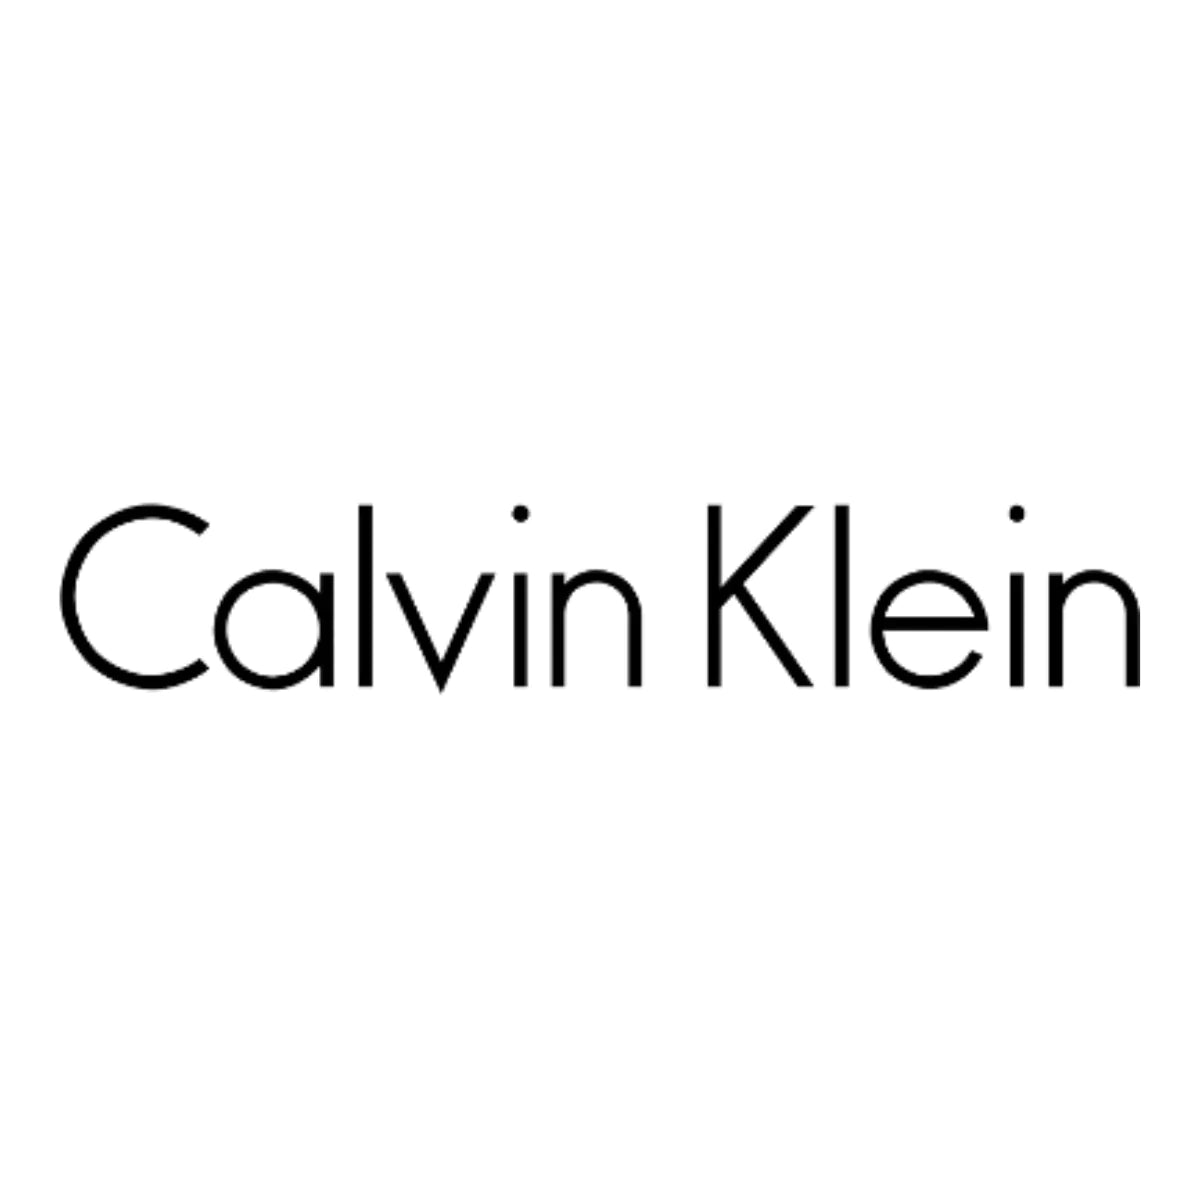  "Calvin Klein eyewear for men and women.at optorium frames, spectacles, opticals"